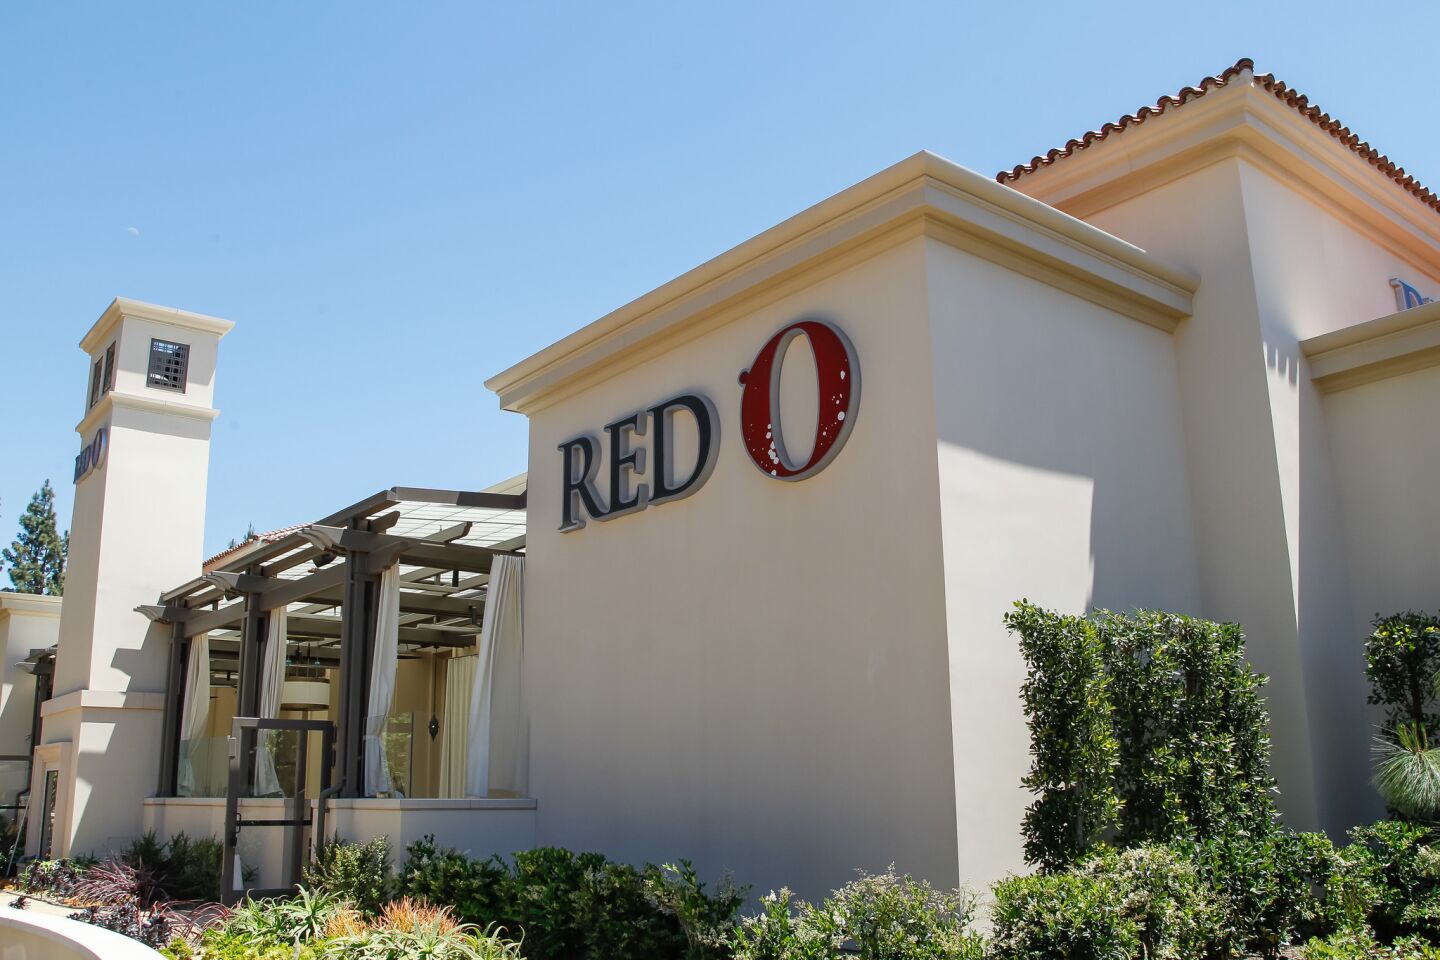 Red O Restaurant Opens In La Jolla